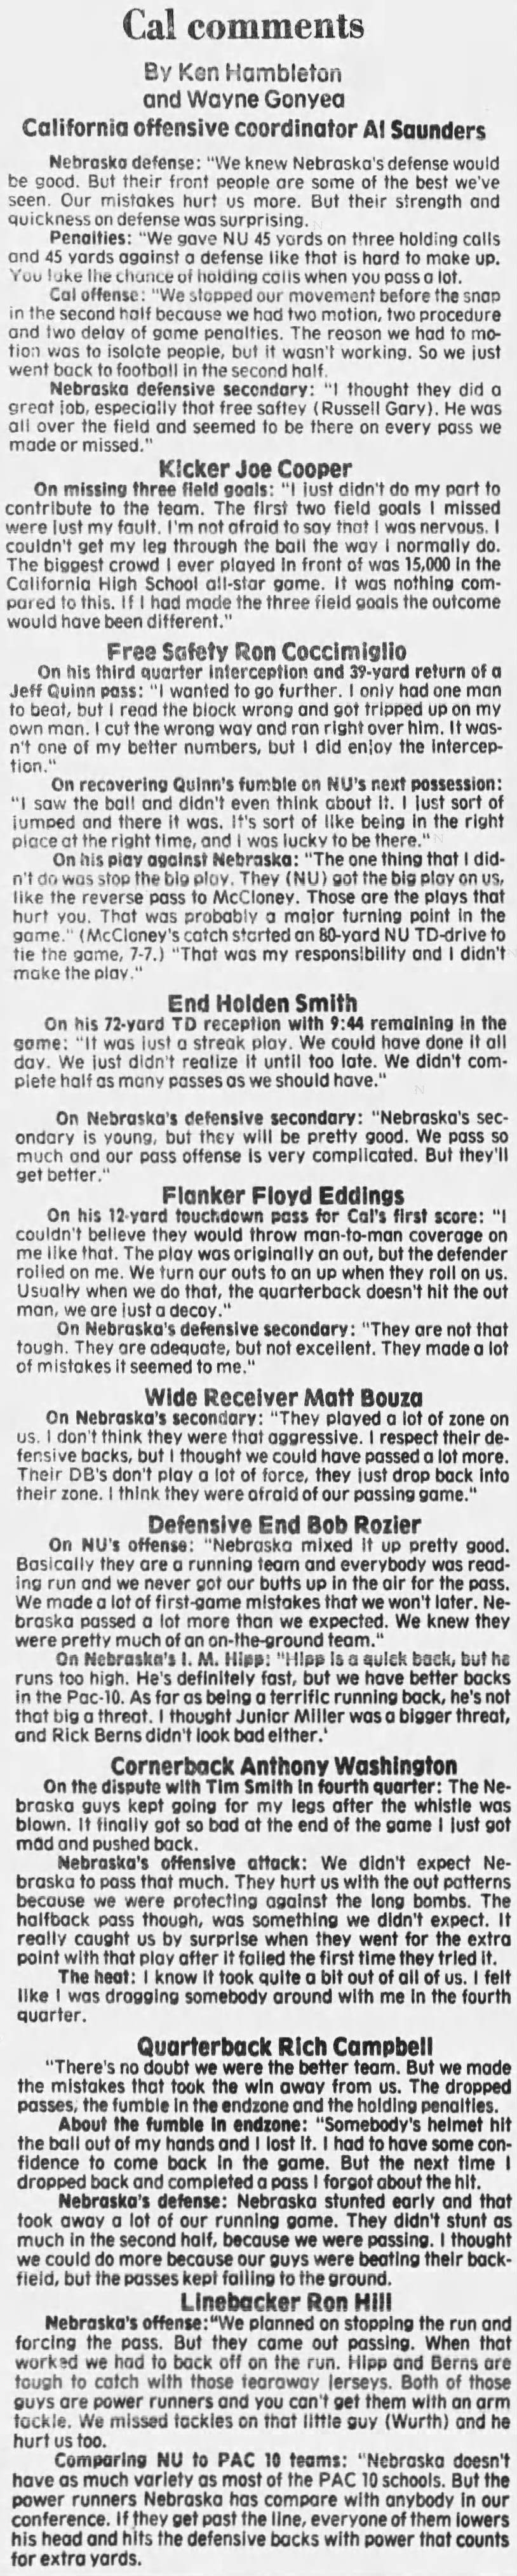 1978 Nebraska-Cal football, Cal quotes